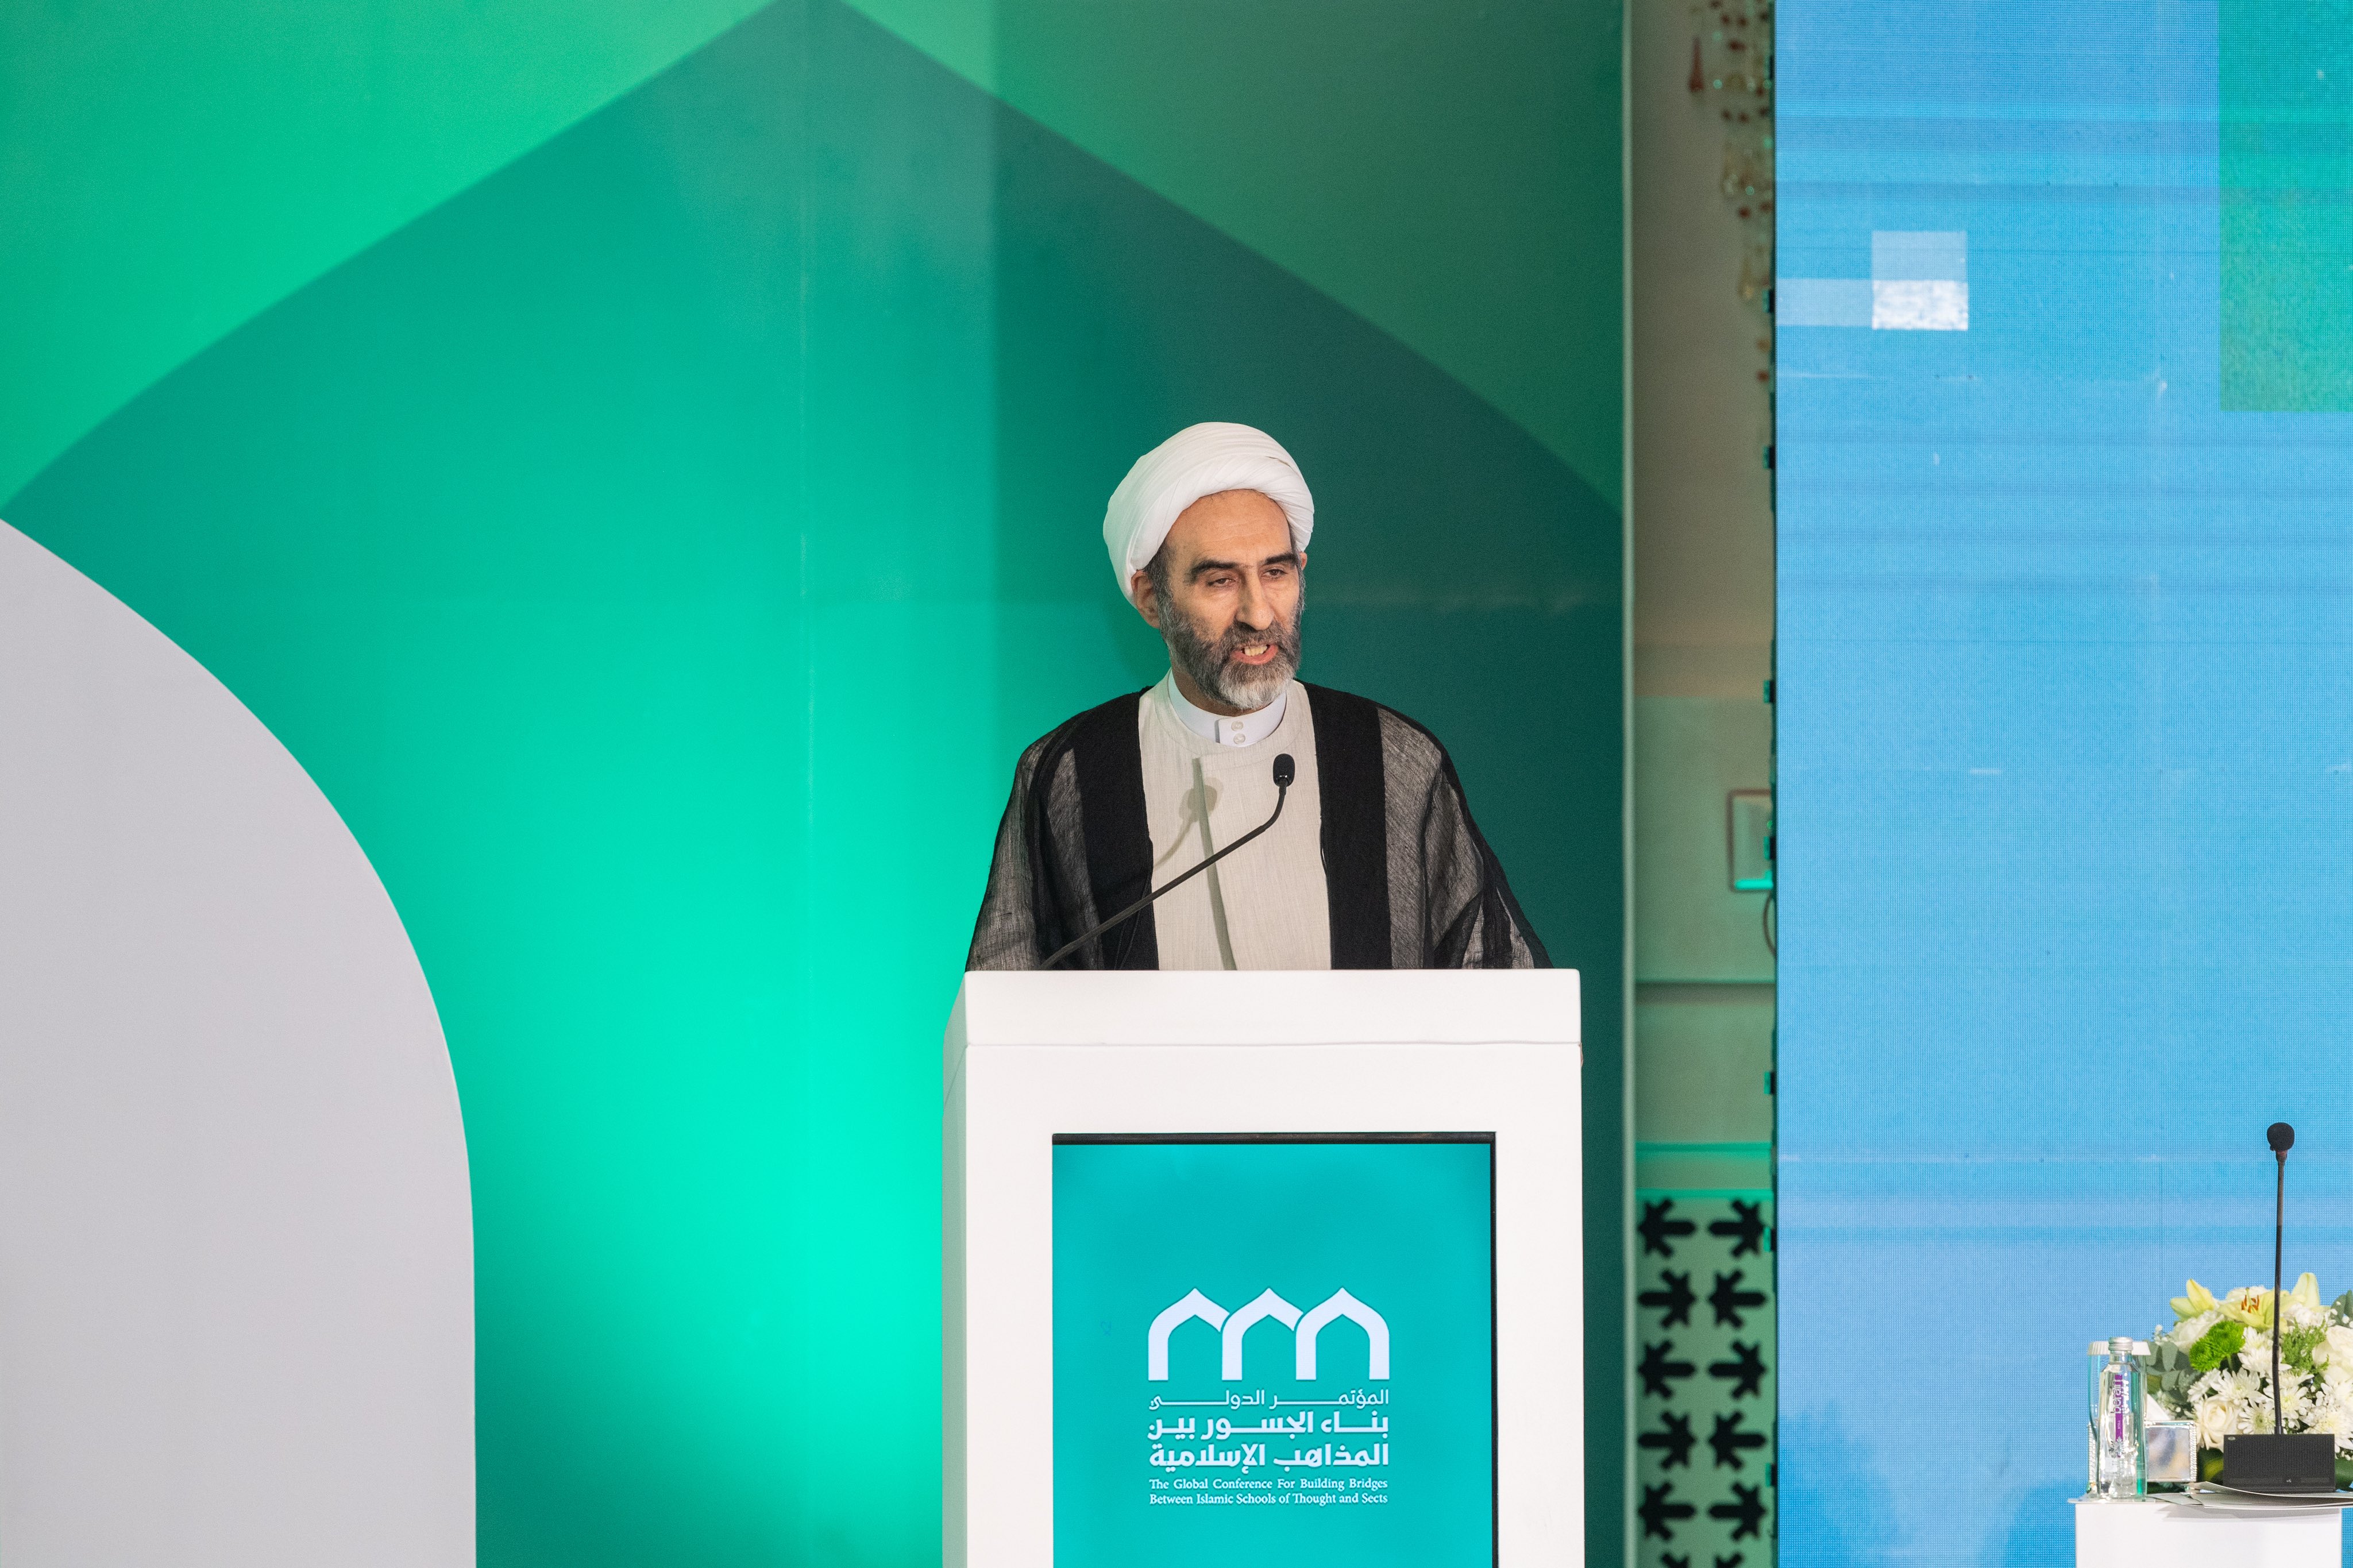 Yang Mulia Ayatollah Syekh Ahmed Mobaleghi, Anggota Majelis Pimpinan Ahli di Republik Islam Iran, dalam pidatonya pada sesi pembukaan konferensi: “Membangun Jembatan Antar Mazhab Islam”: